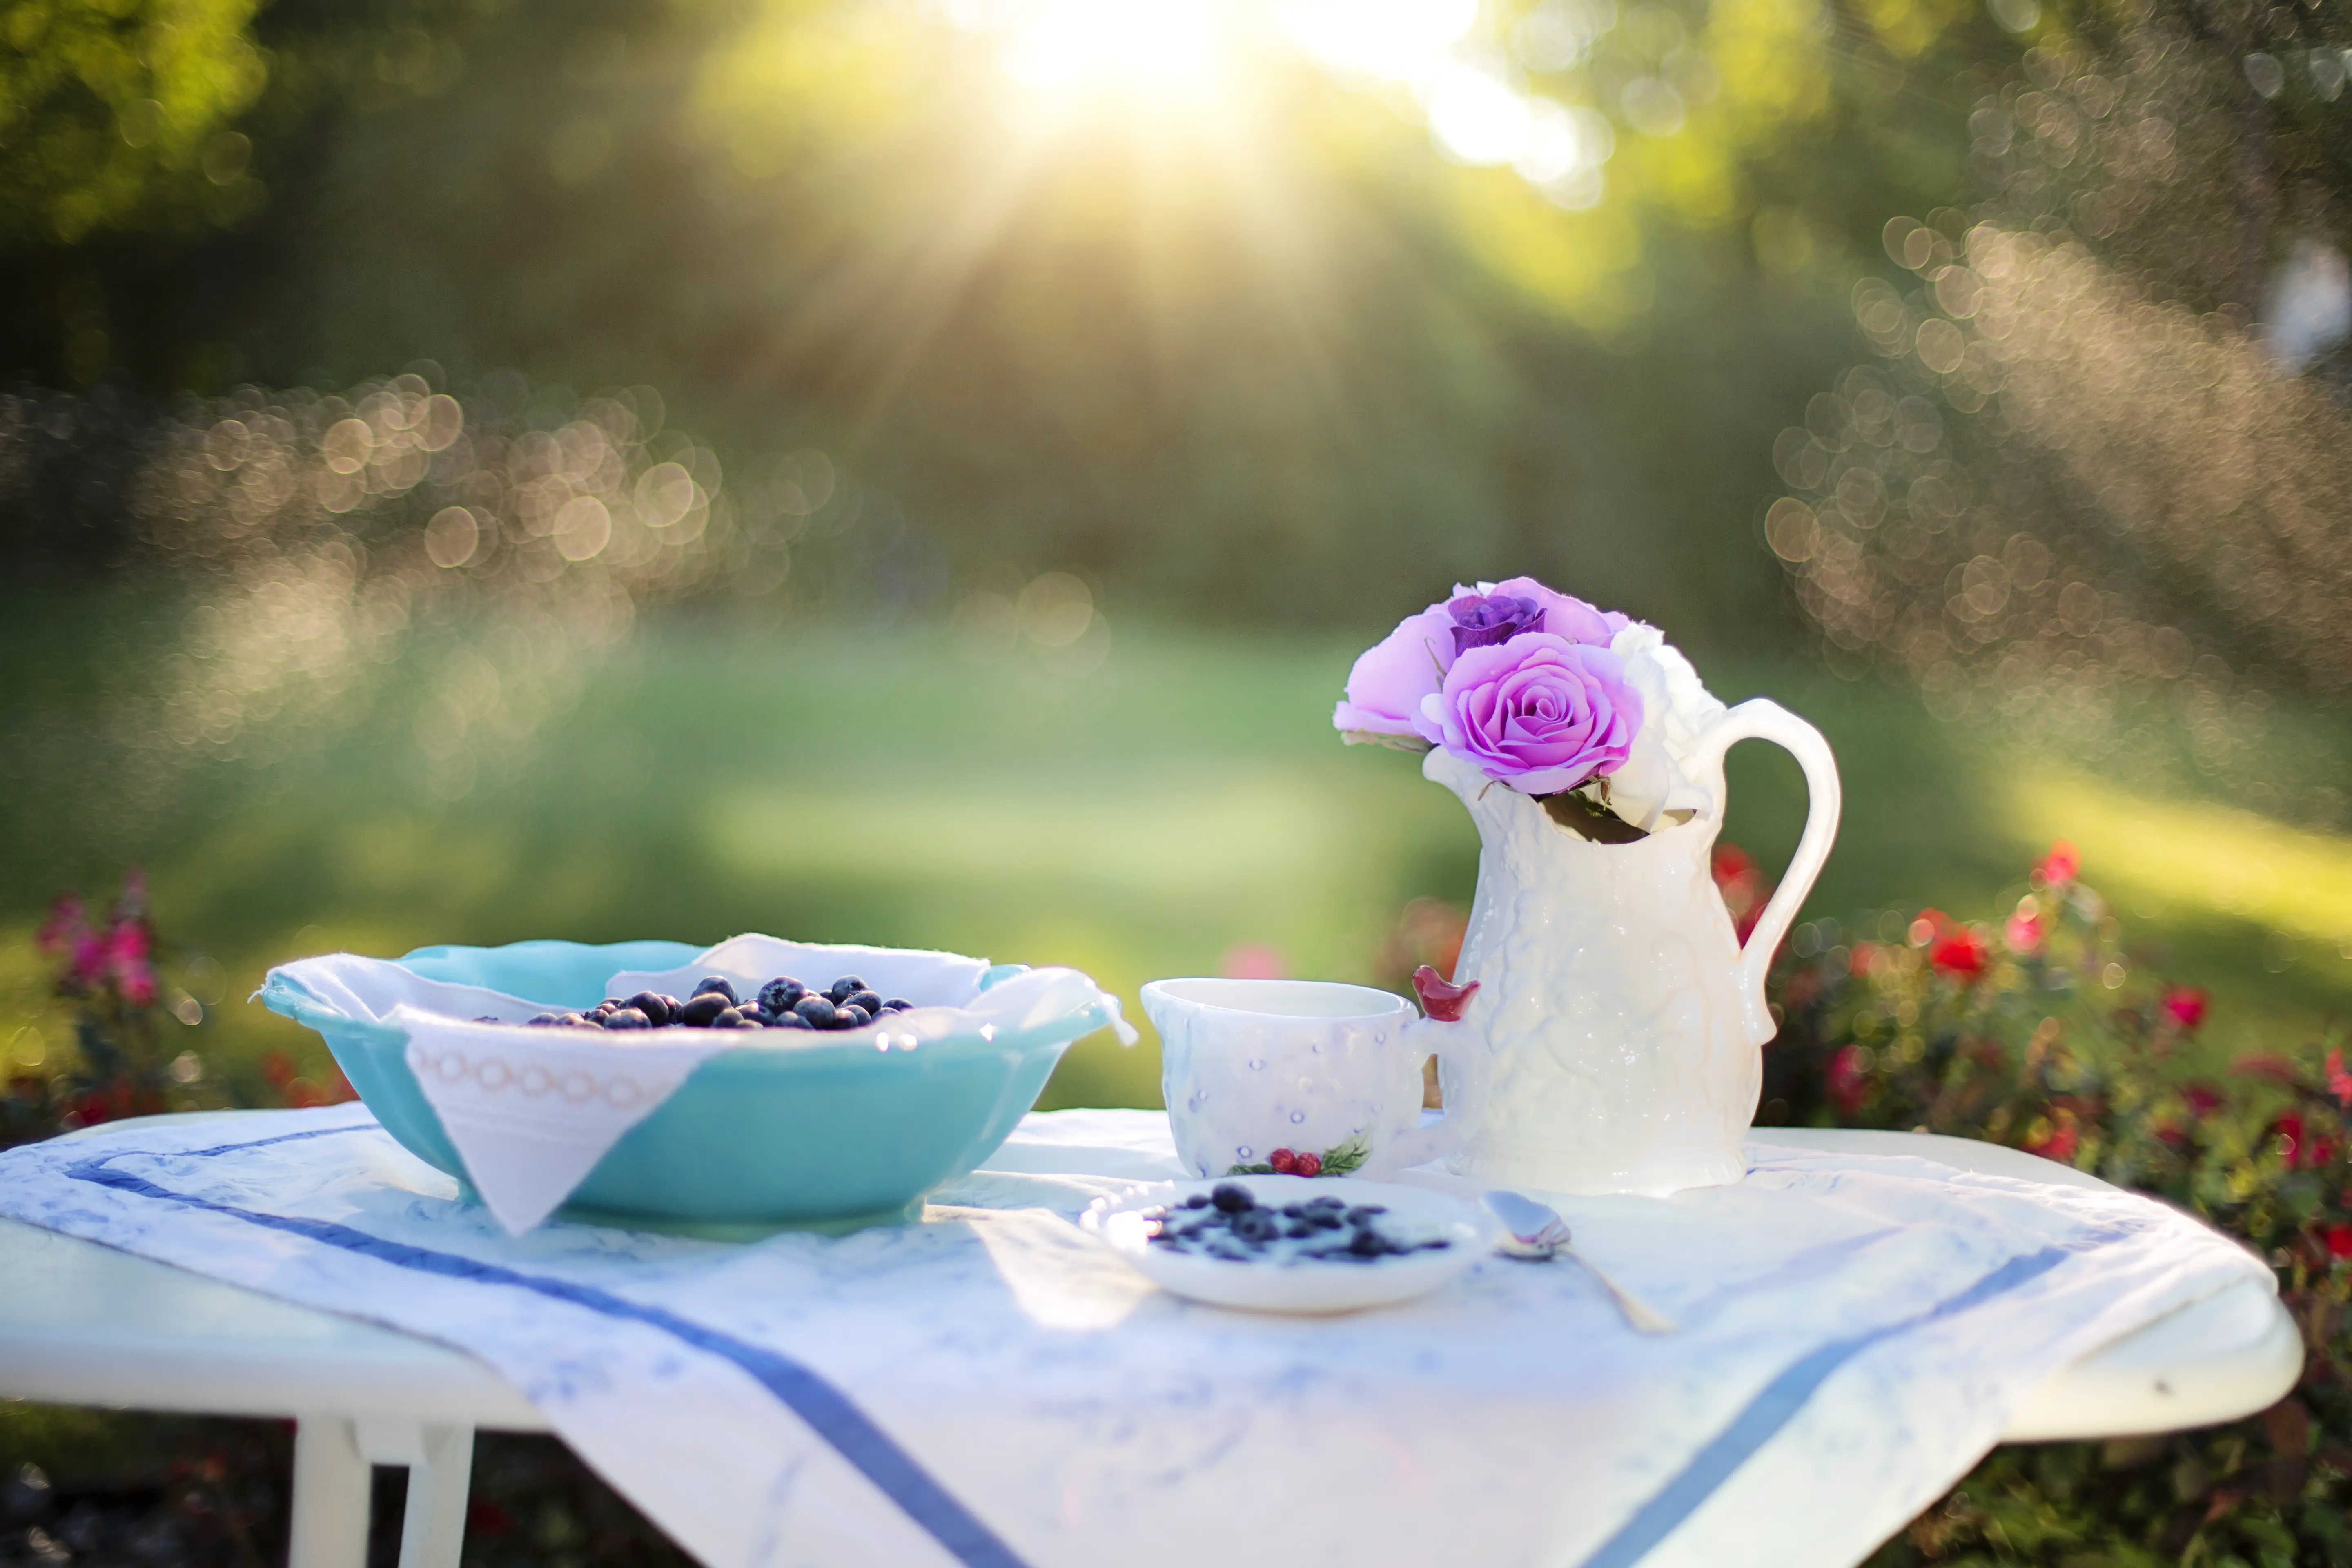 blueberry, breakfast, sunlight. 3000 calorie meal plan